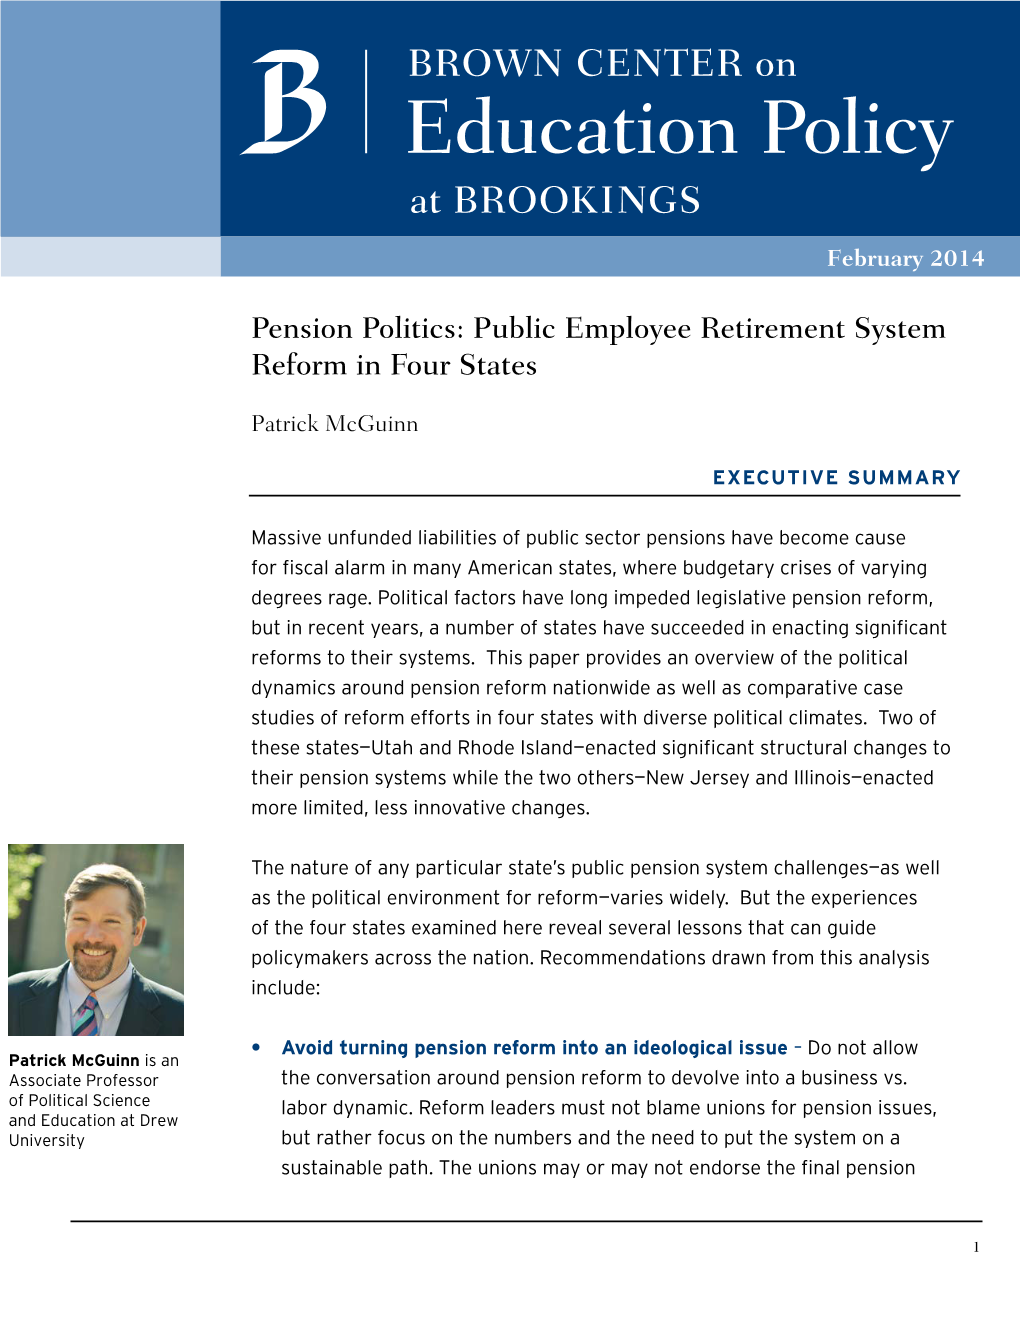 Pension Politics: Public Employee Retirement System Reform in Four States